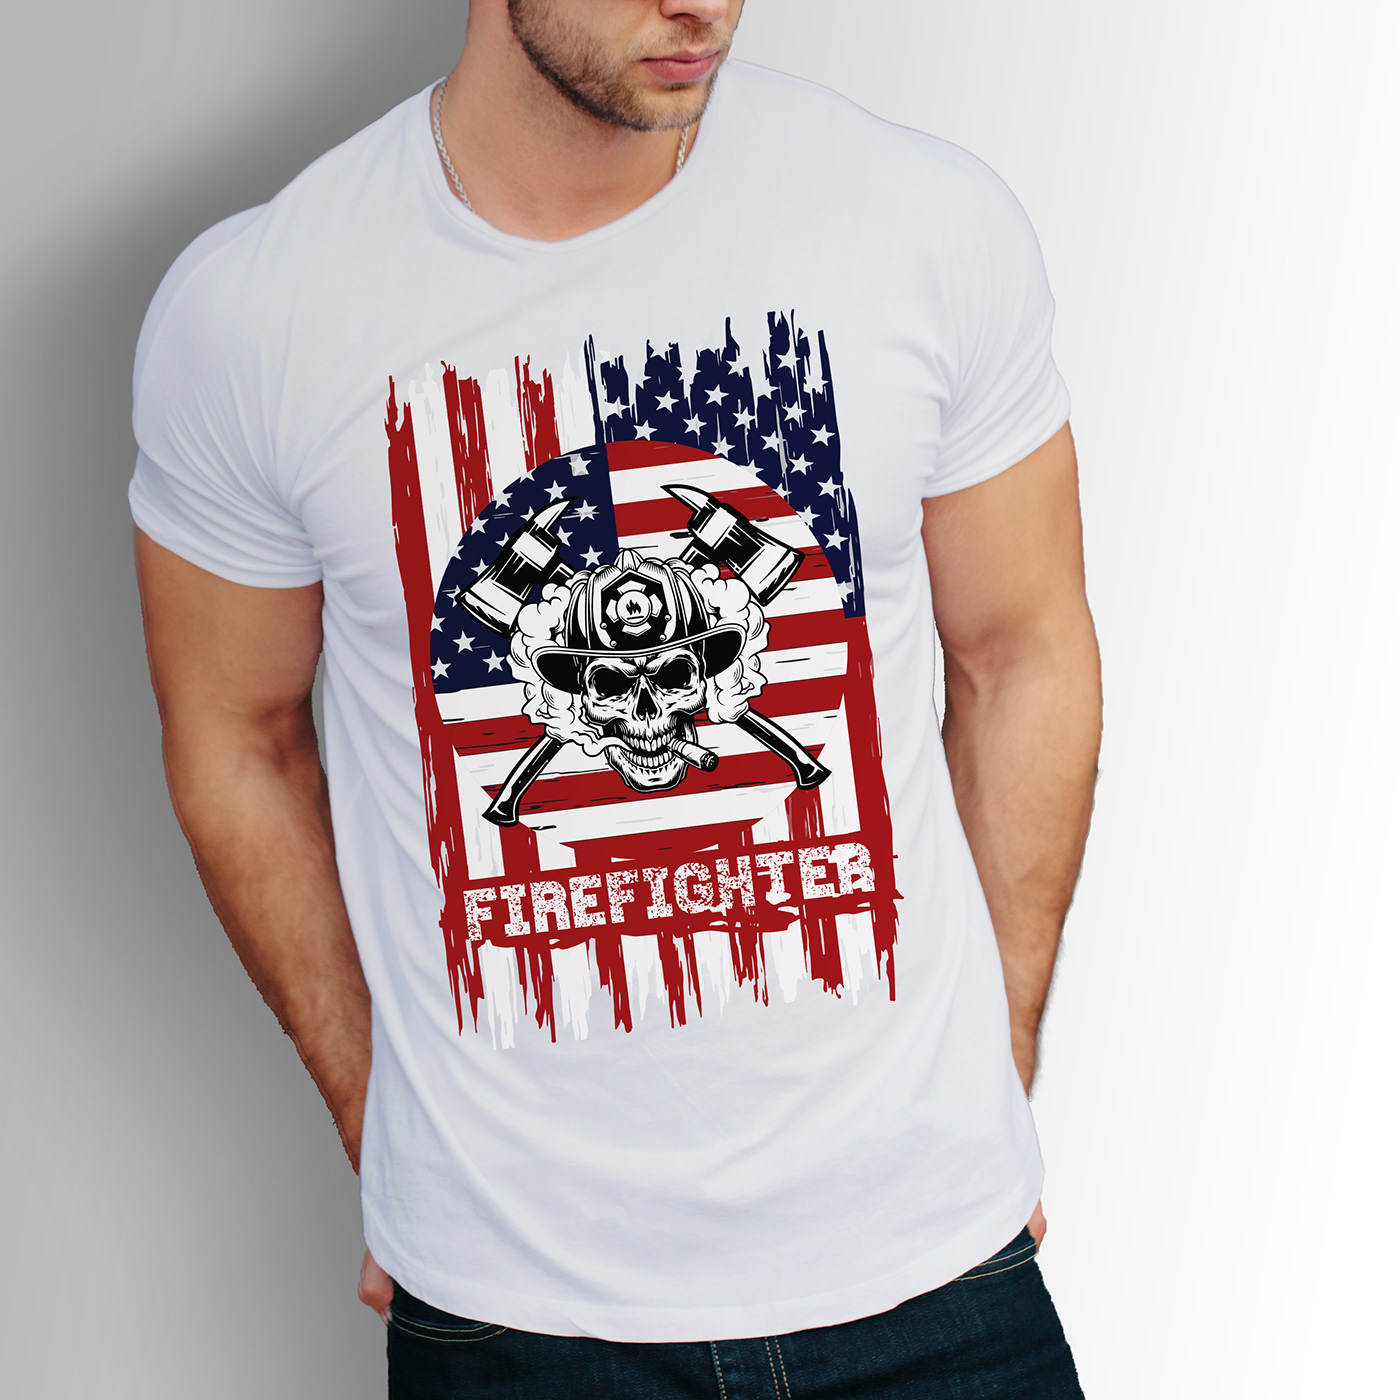 t shirt mockup free download free mockup  t shirt designer firefighter t shirt american flag baktiaruk Graphic Designer free Firefighter